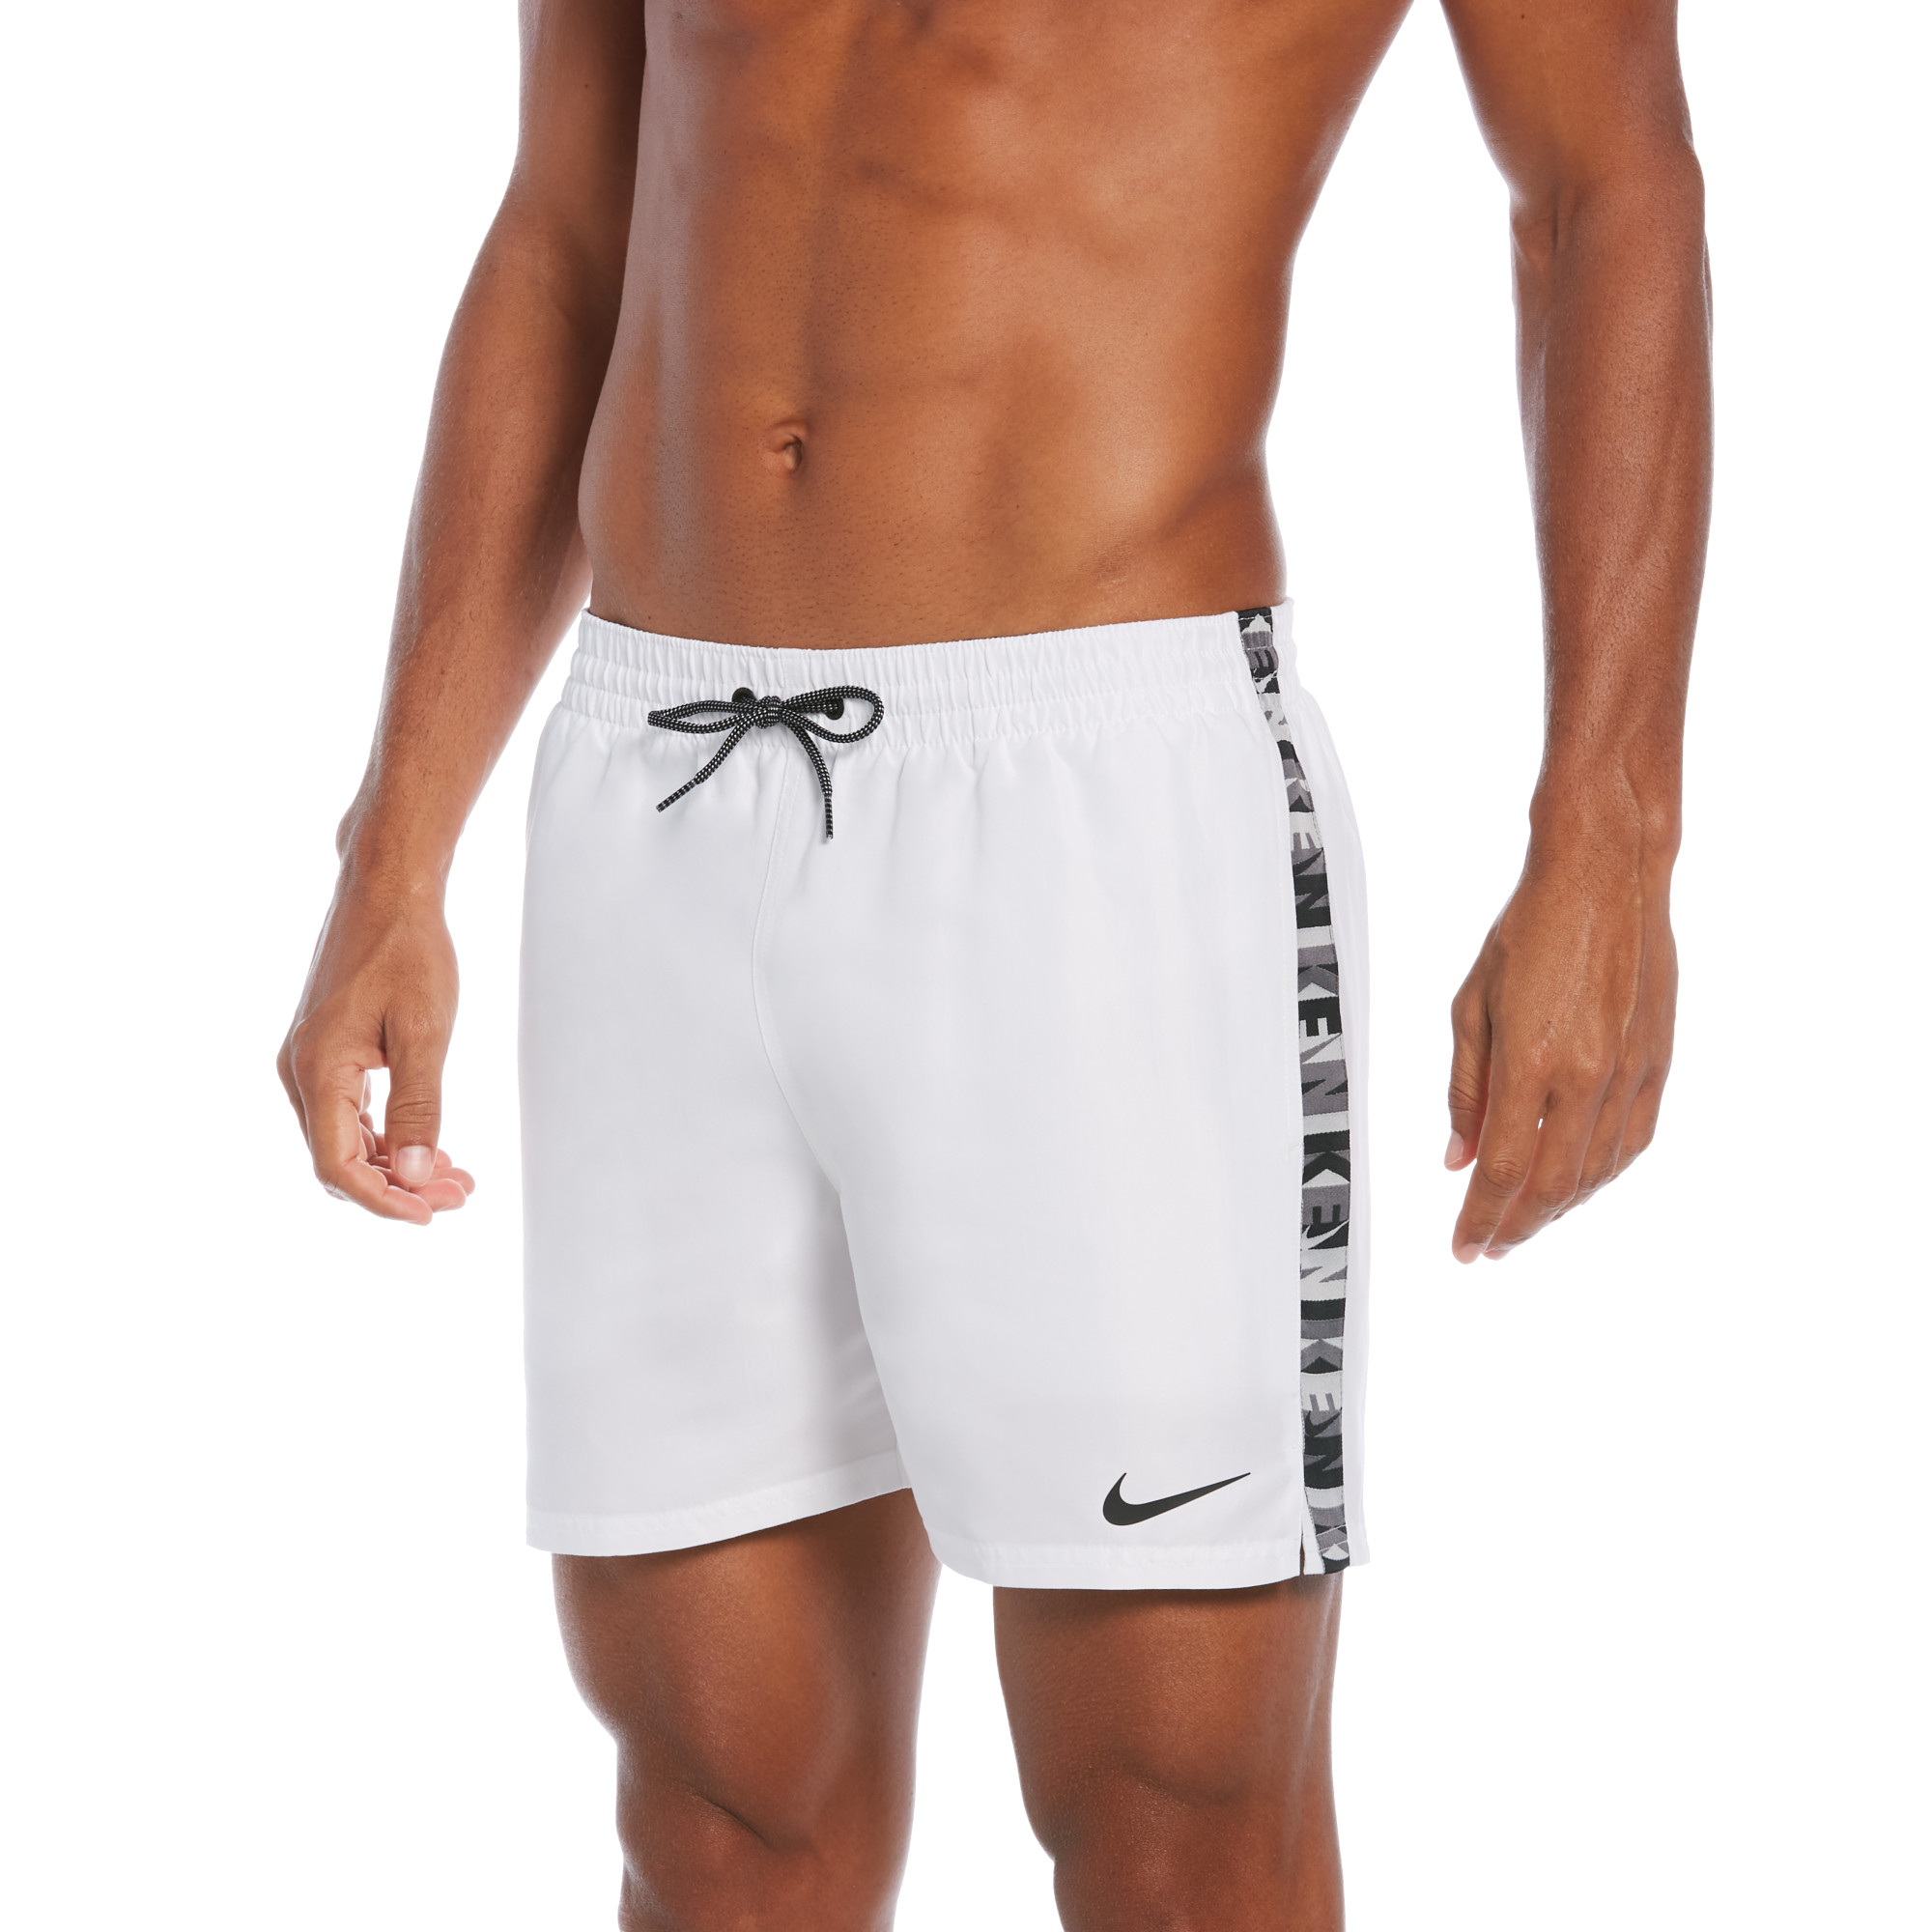 Шорты мужские Nike Swim NESSC473 белые L